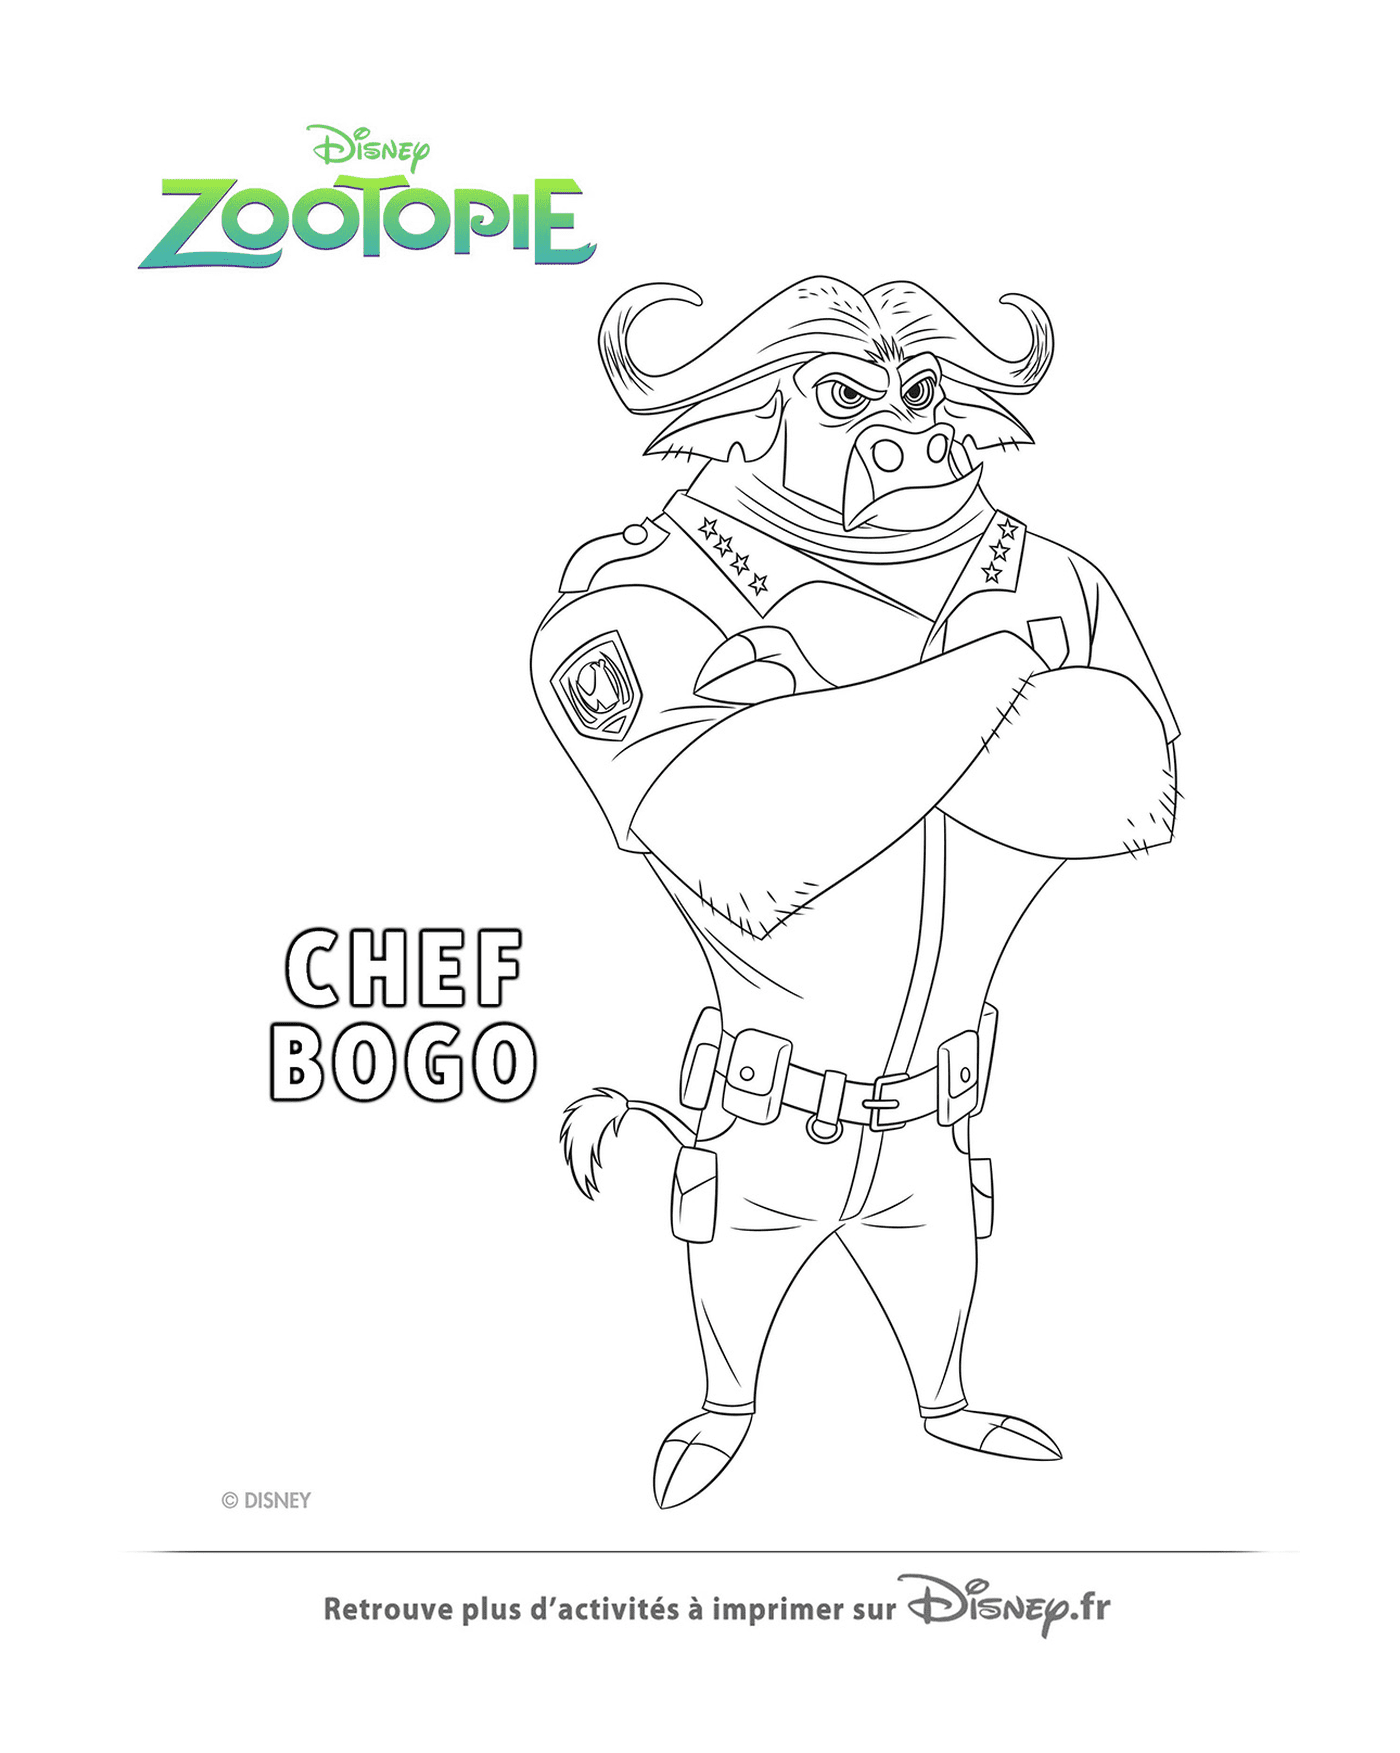  Chief Bogo of the Zootopie Police 